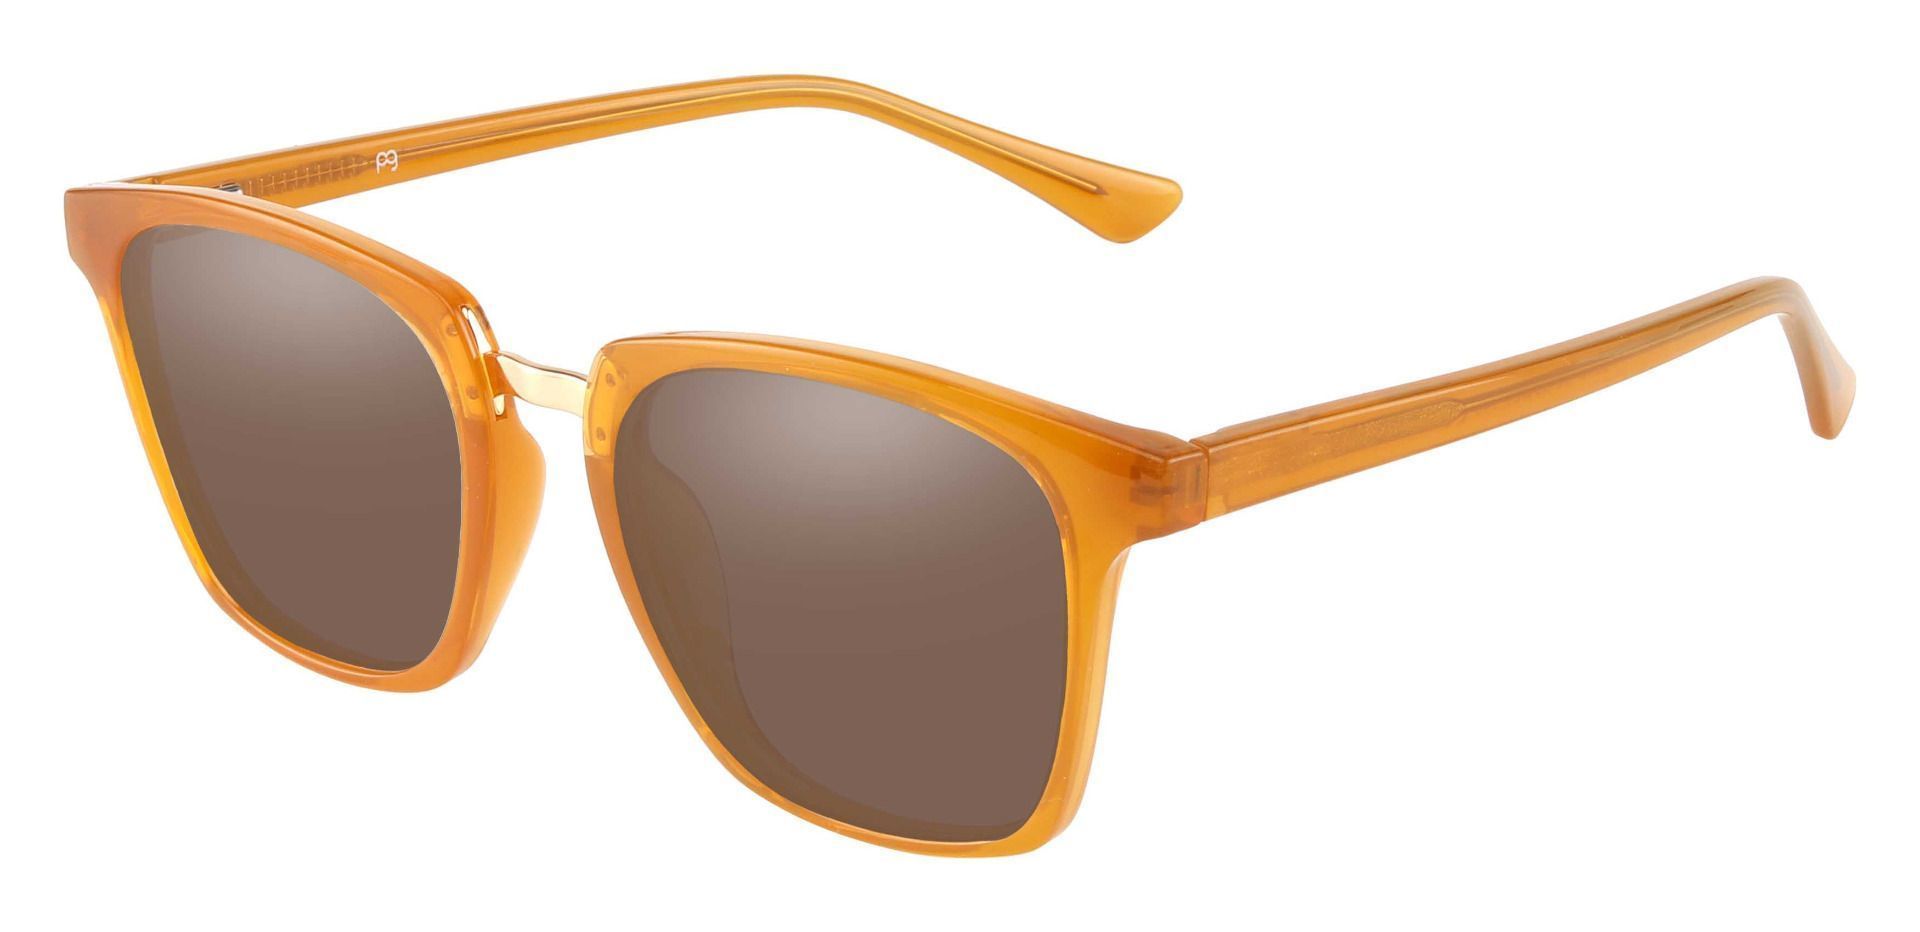 Delta Square Reading Sunglasses - Orange Frame With Brown Lenses